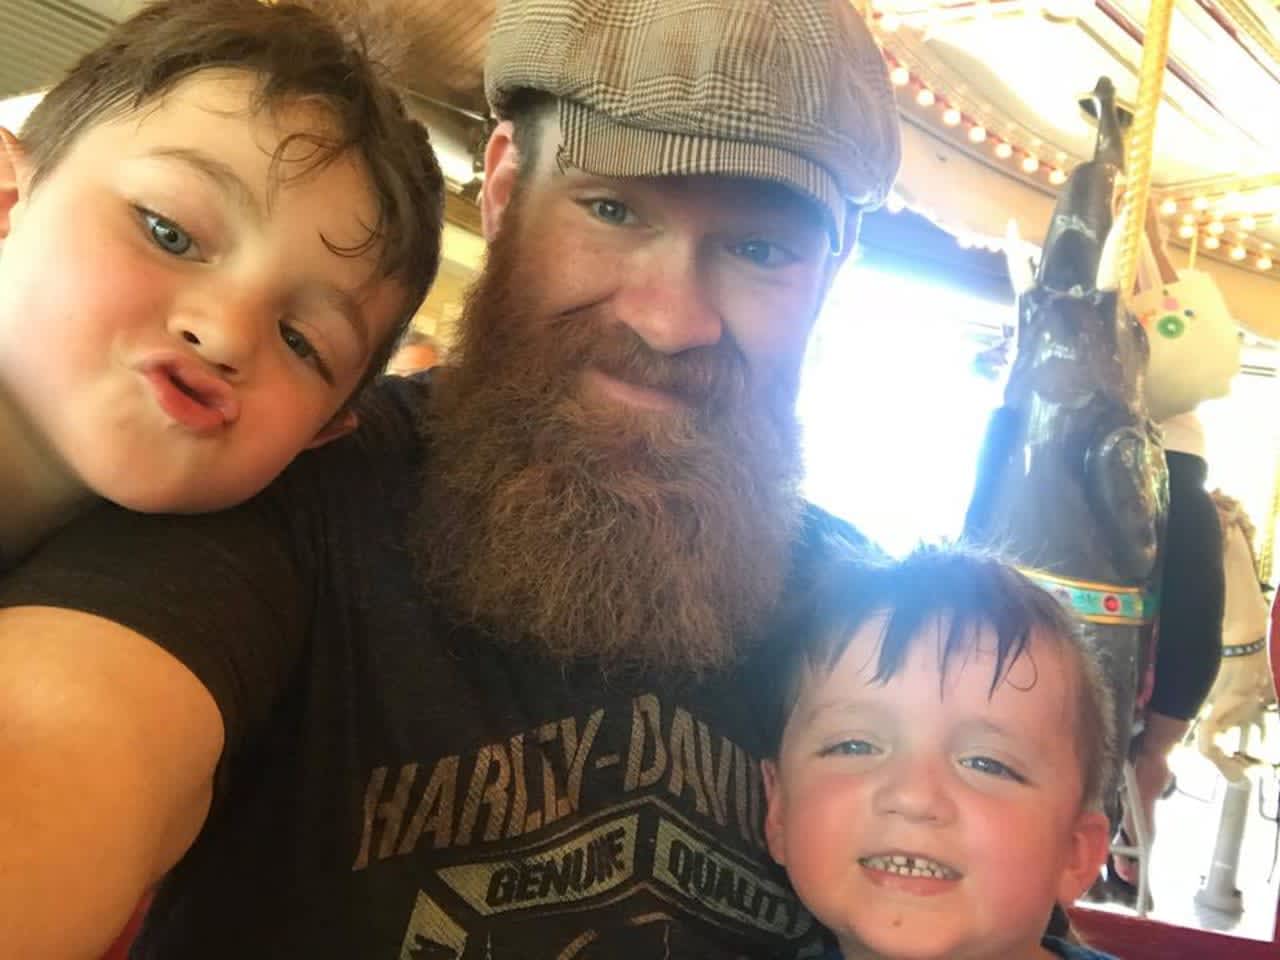 Jason Spittle, 42, of Fair Lawn, and his boys.